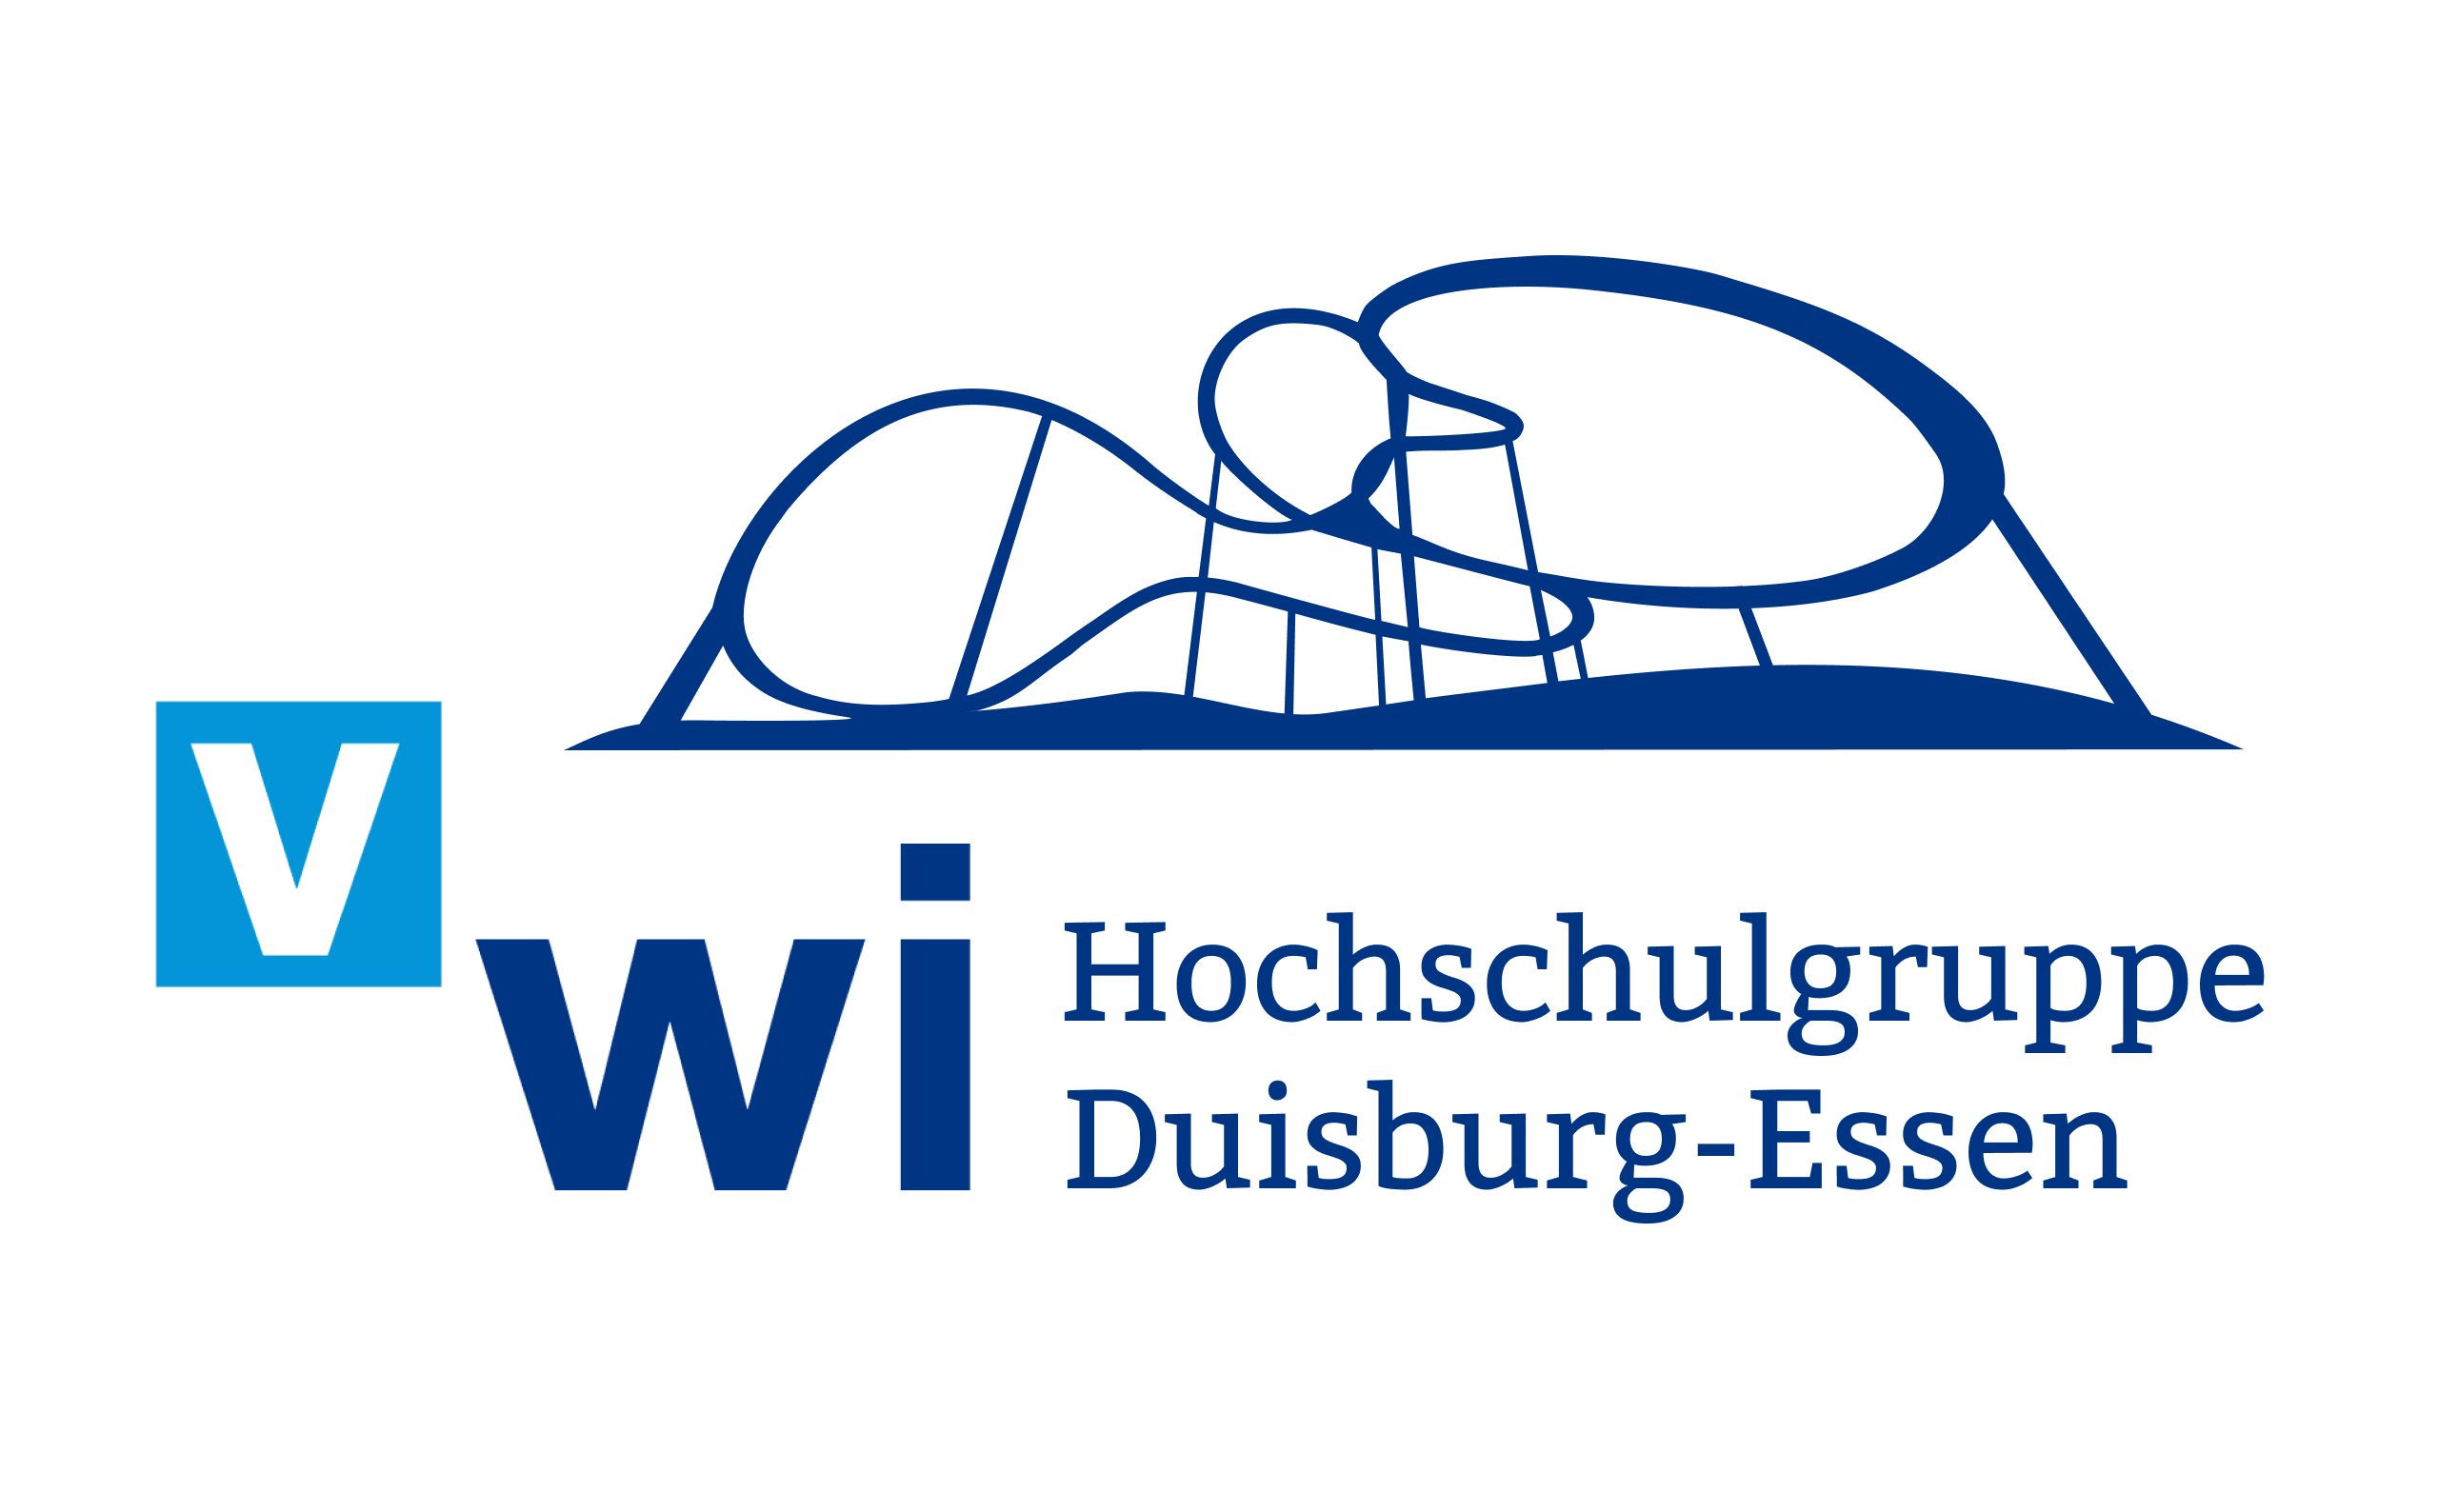 VWI Hochschulgruppe Duisburg-Essen